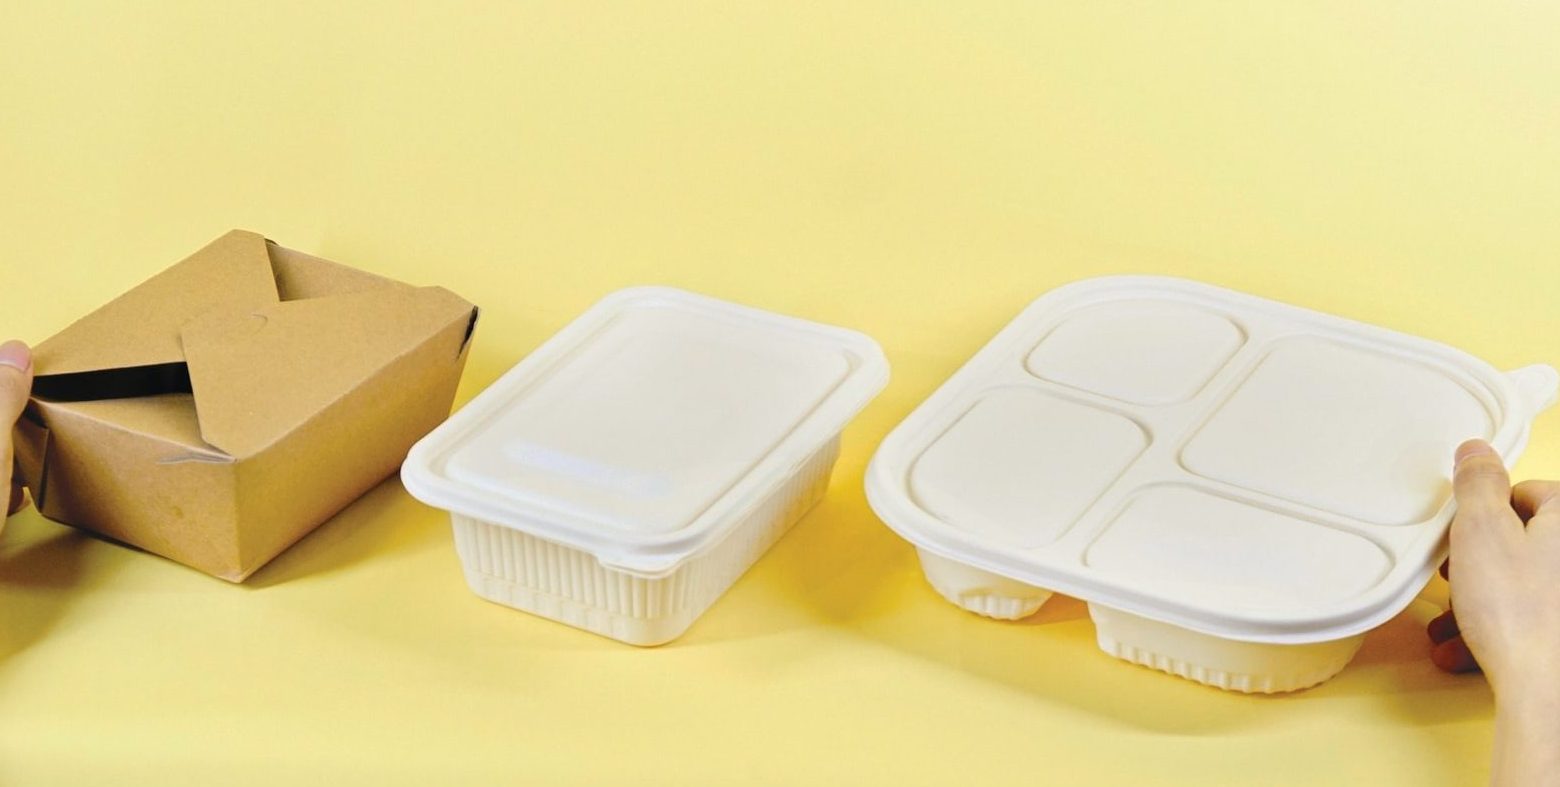 biodegradable packaging